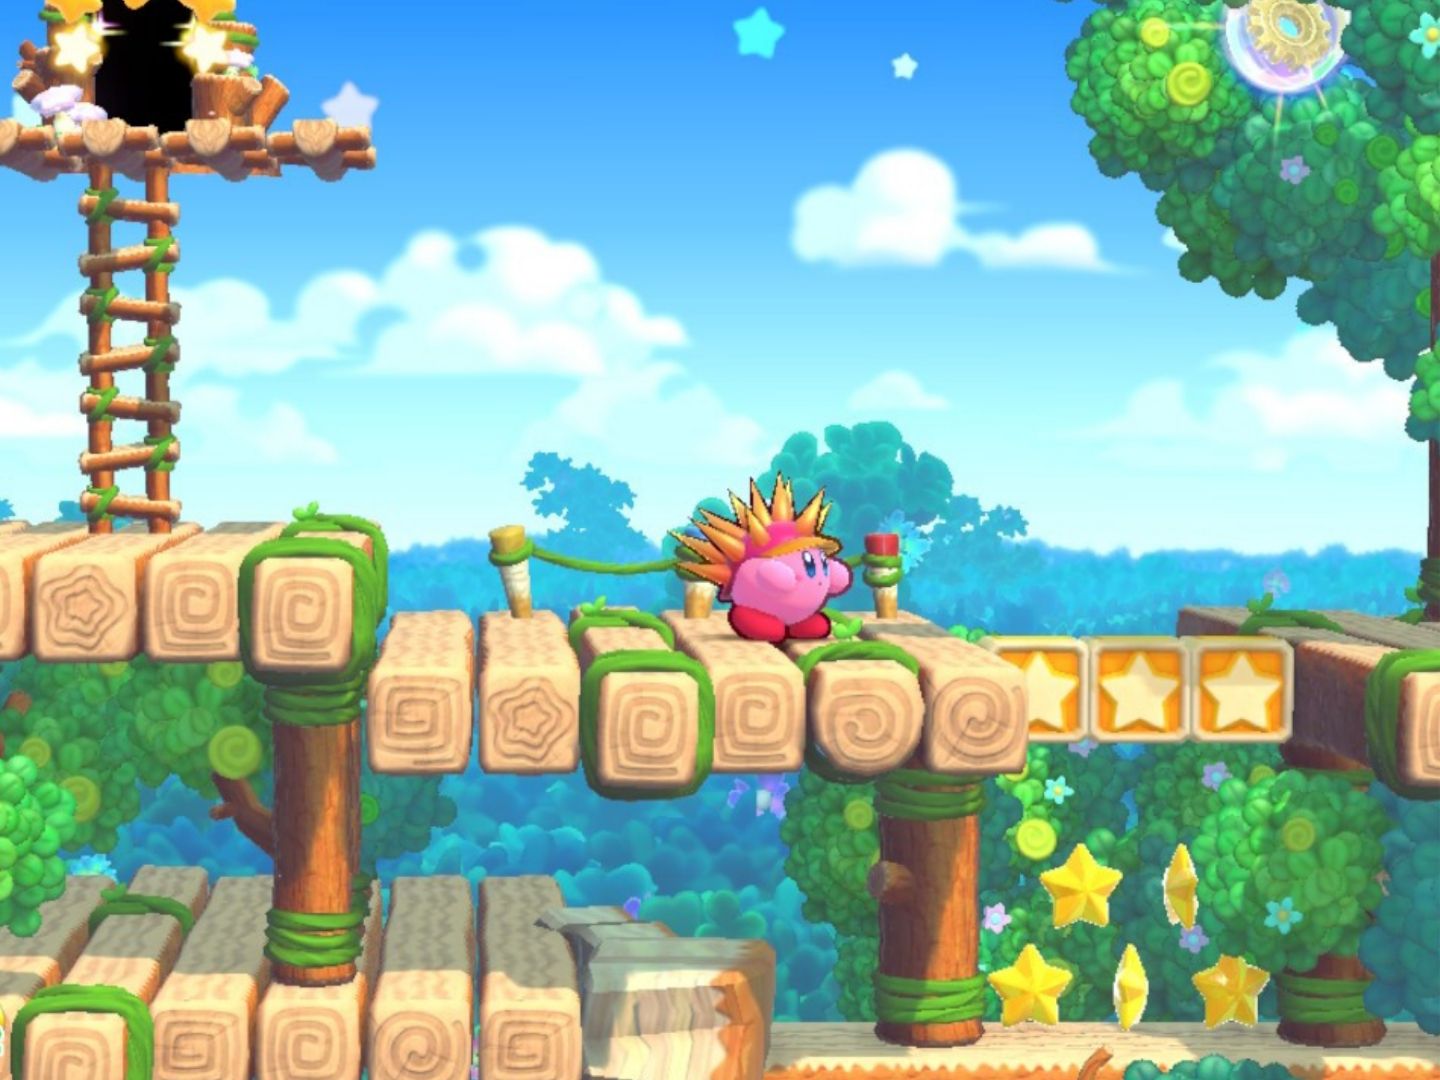 Kirby below an Energy Sphere in the top right corner.